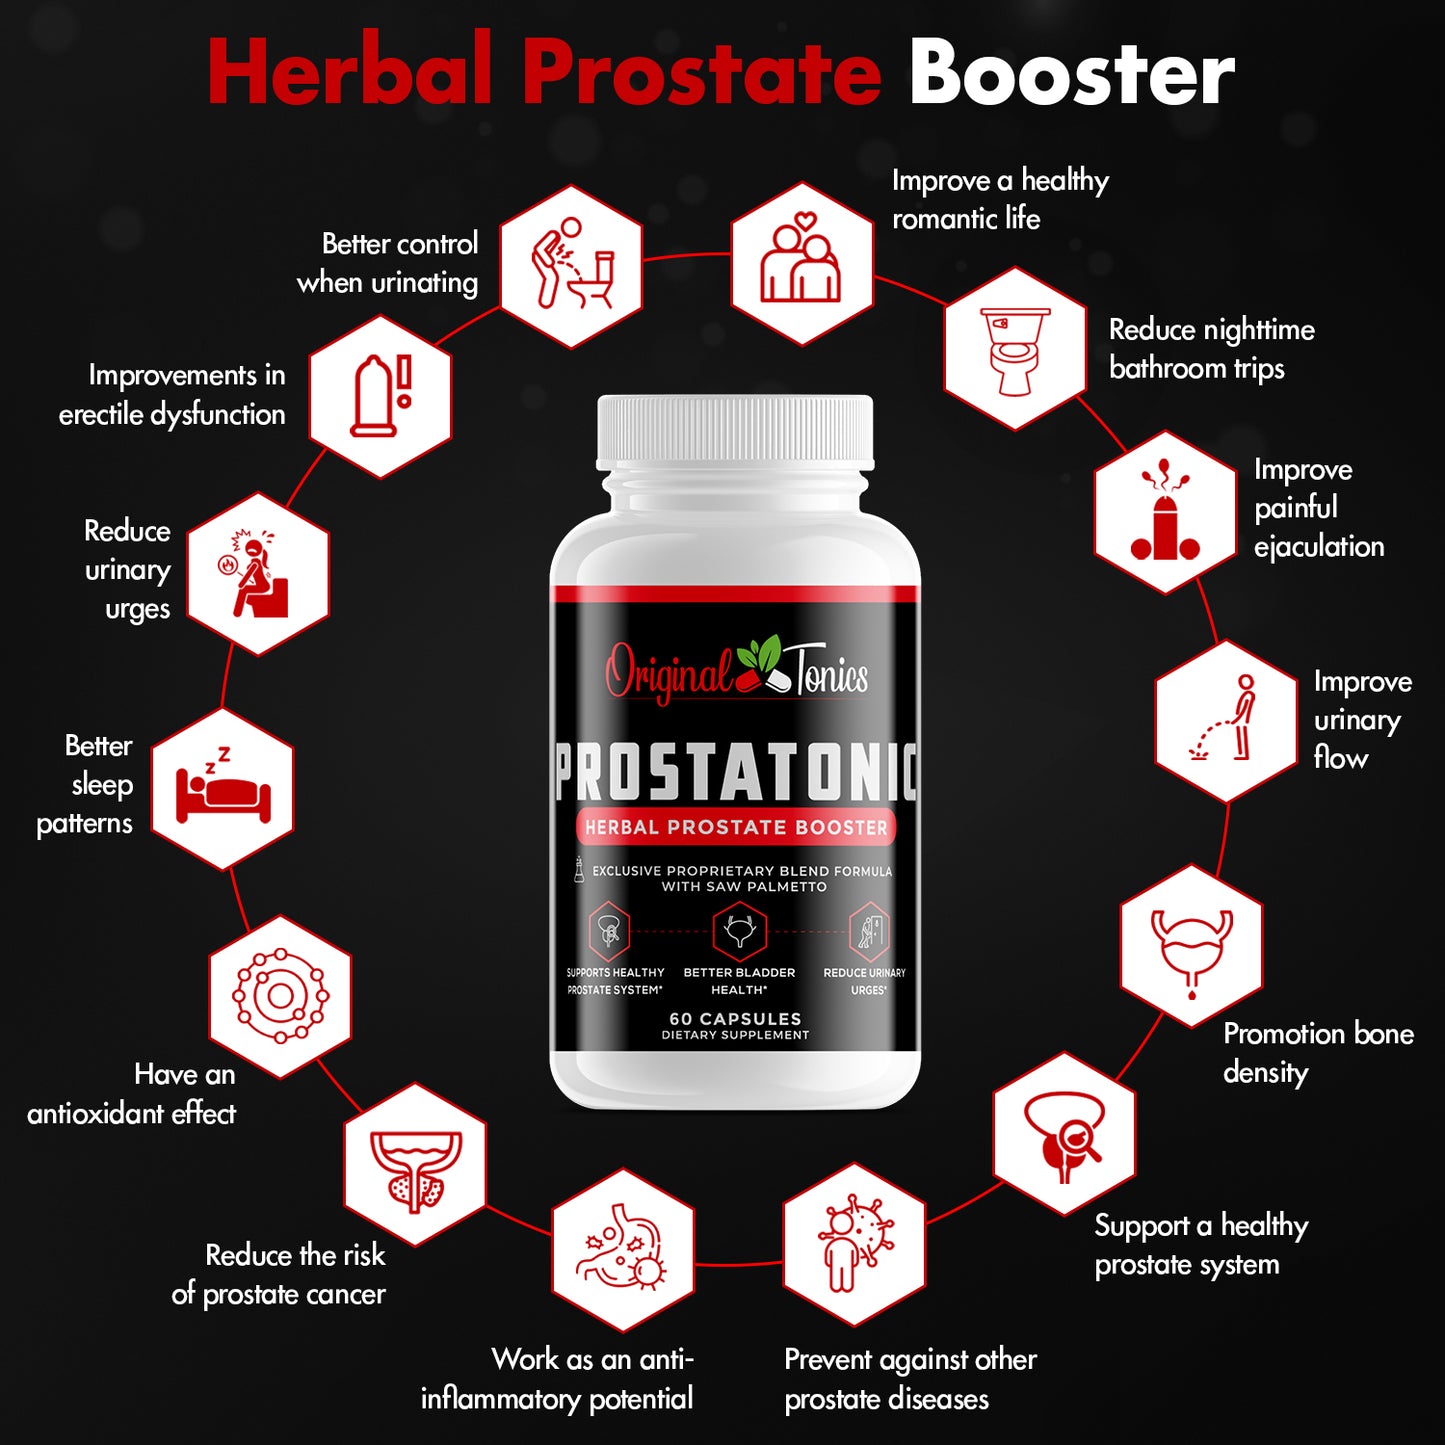 PROSTATONIC-Herbal Prostate Booster